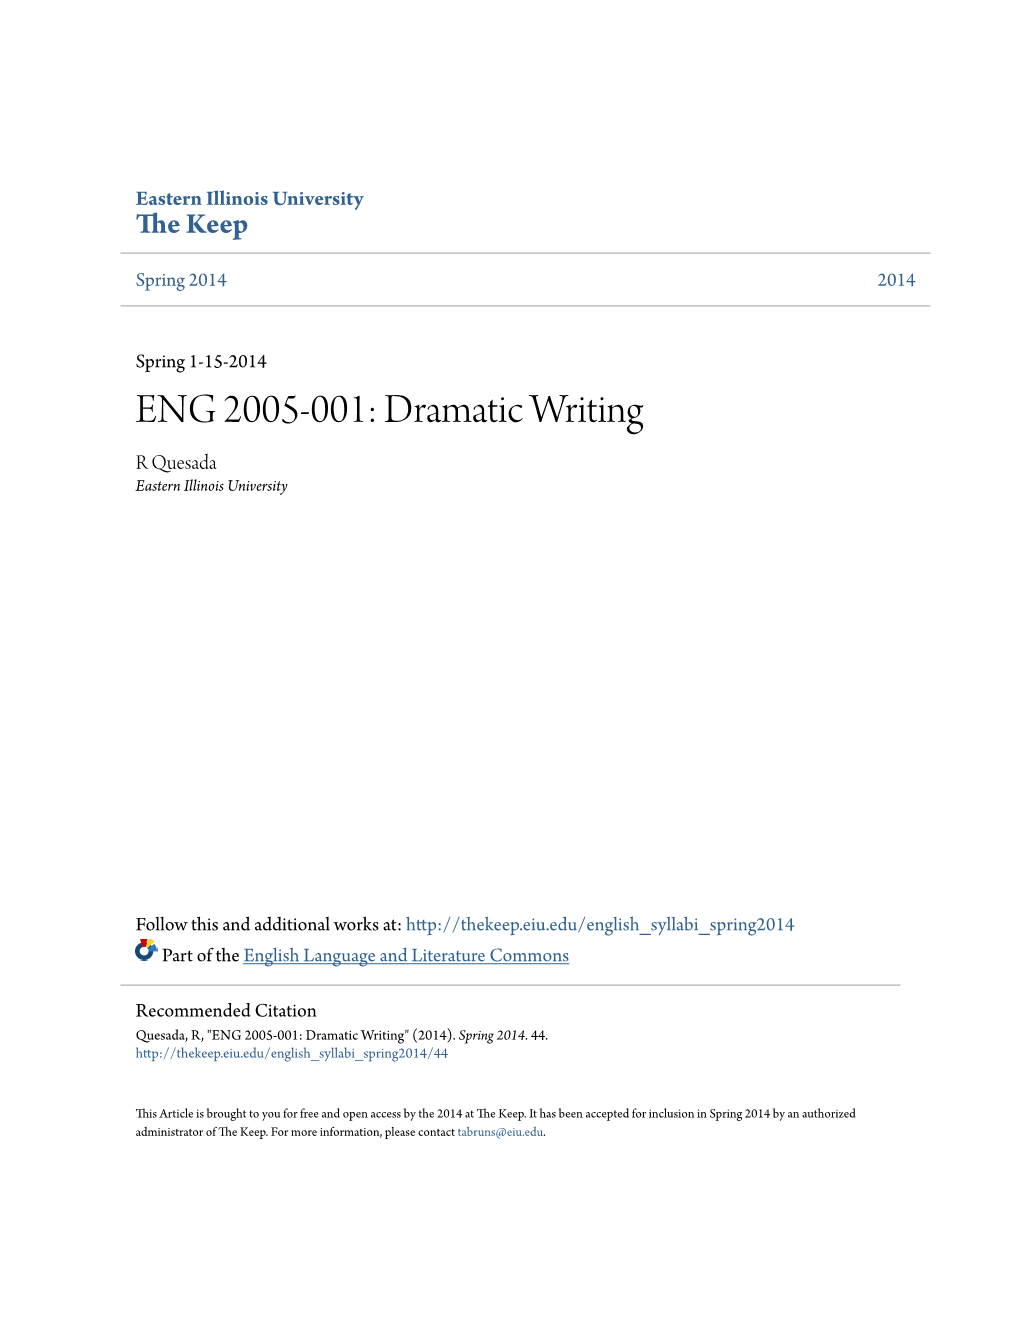 ENG 2005-001: Dramatic Writing R Quesada Eastern Illinois University